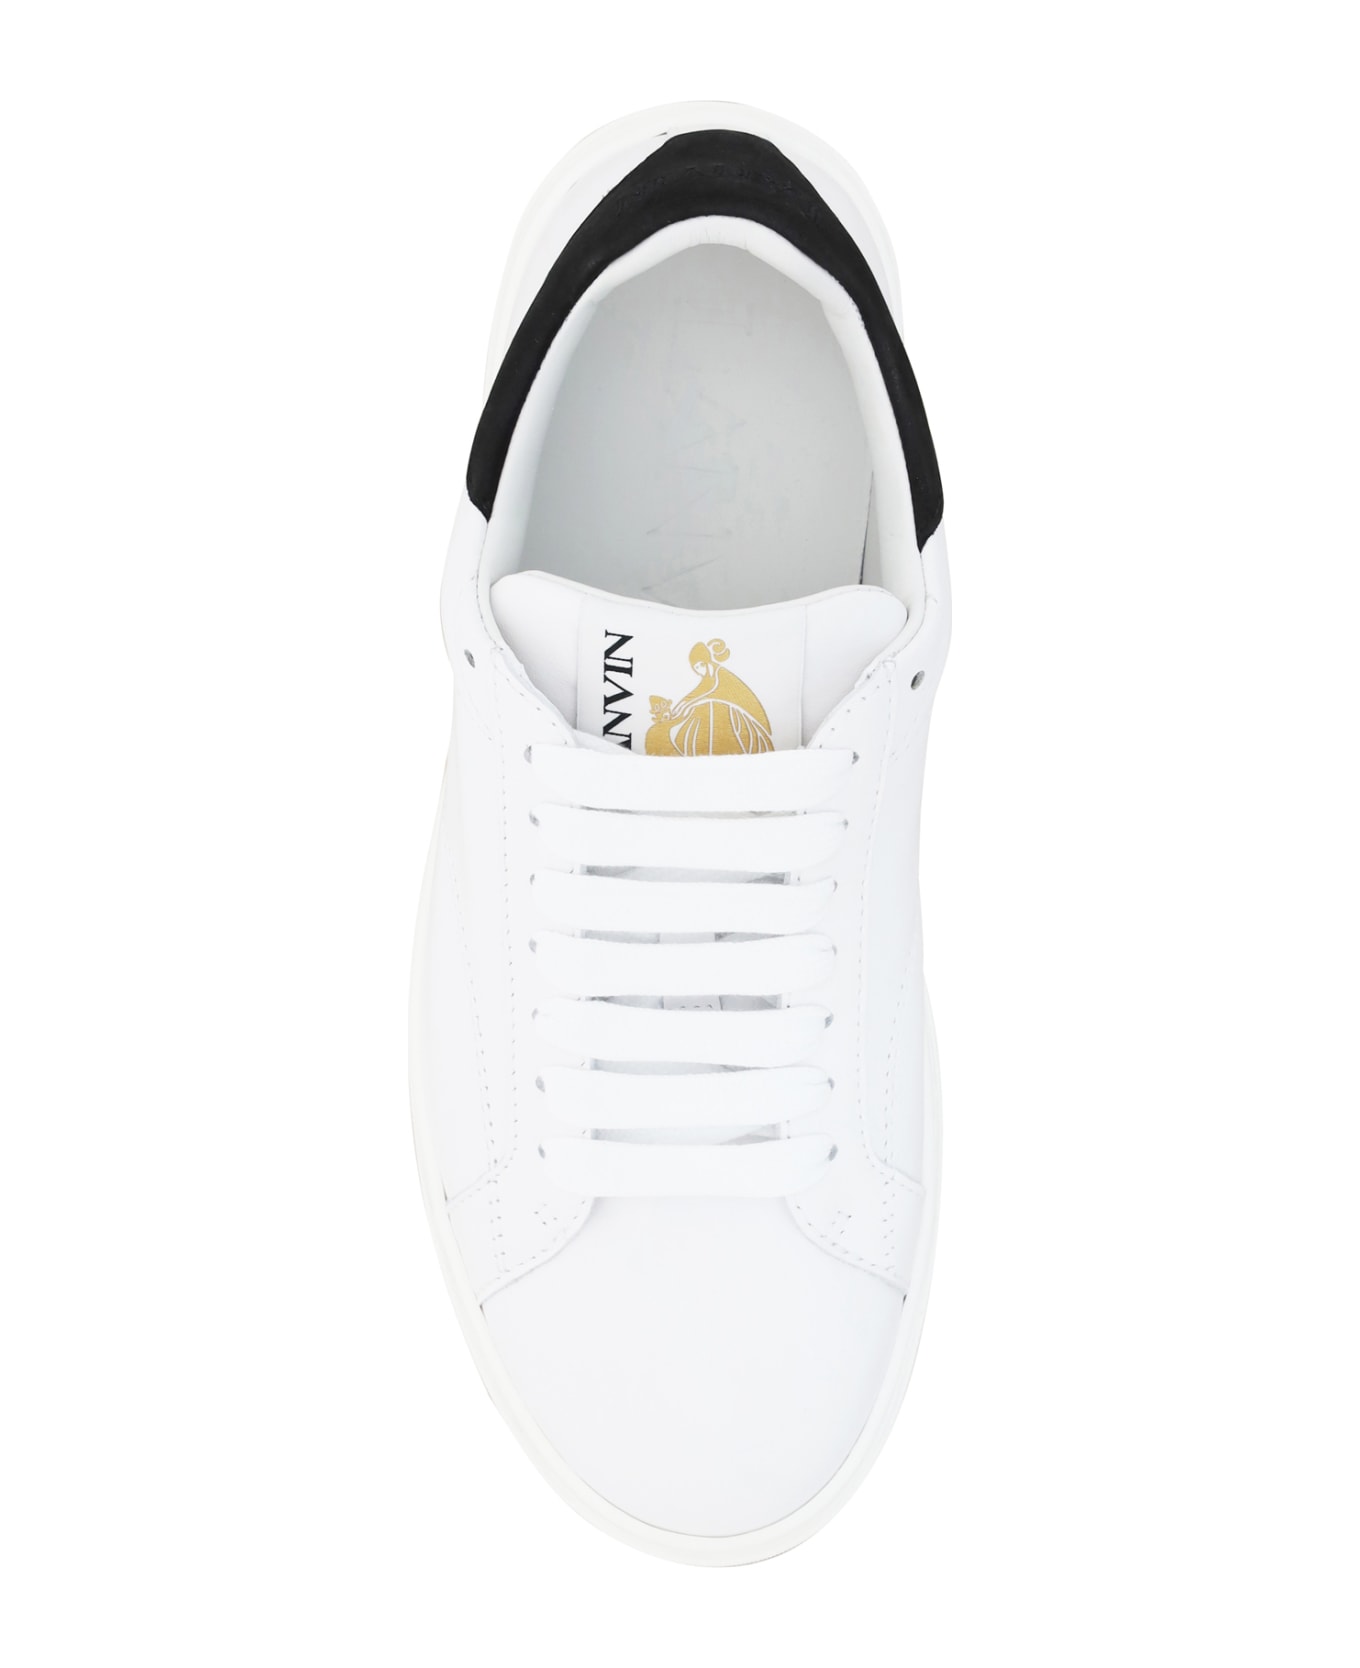 Lanvin Sneakers - White/black